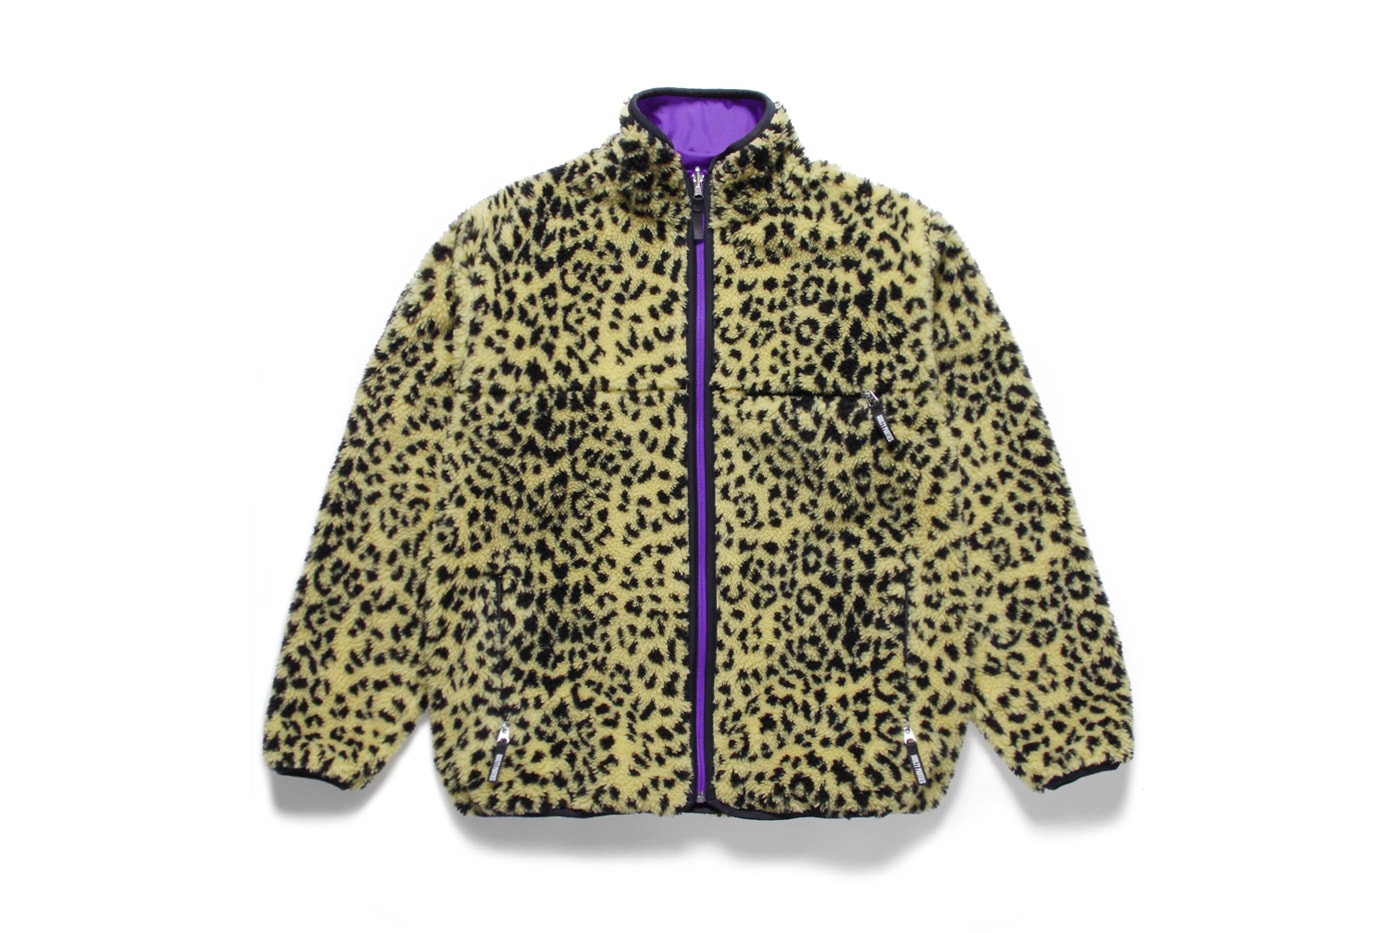 WACKO MARIA Leopard Print Reversible Fleece Jacket outerwear zip up sweaters guilty parties paradise tokyo pattern animal nylon fall winter 2019